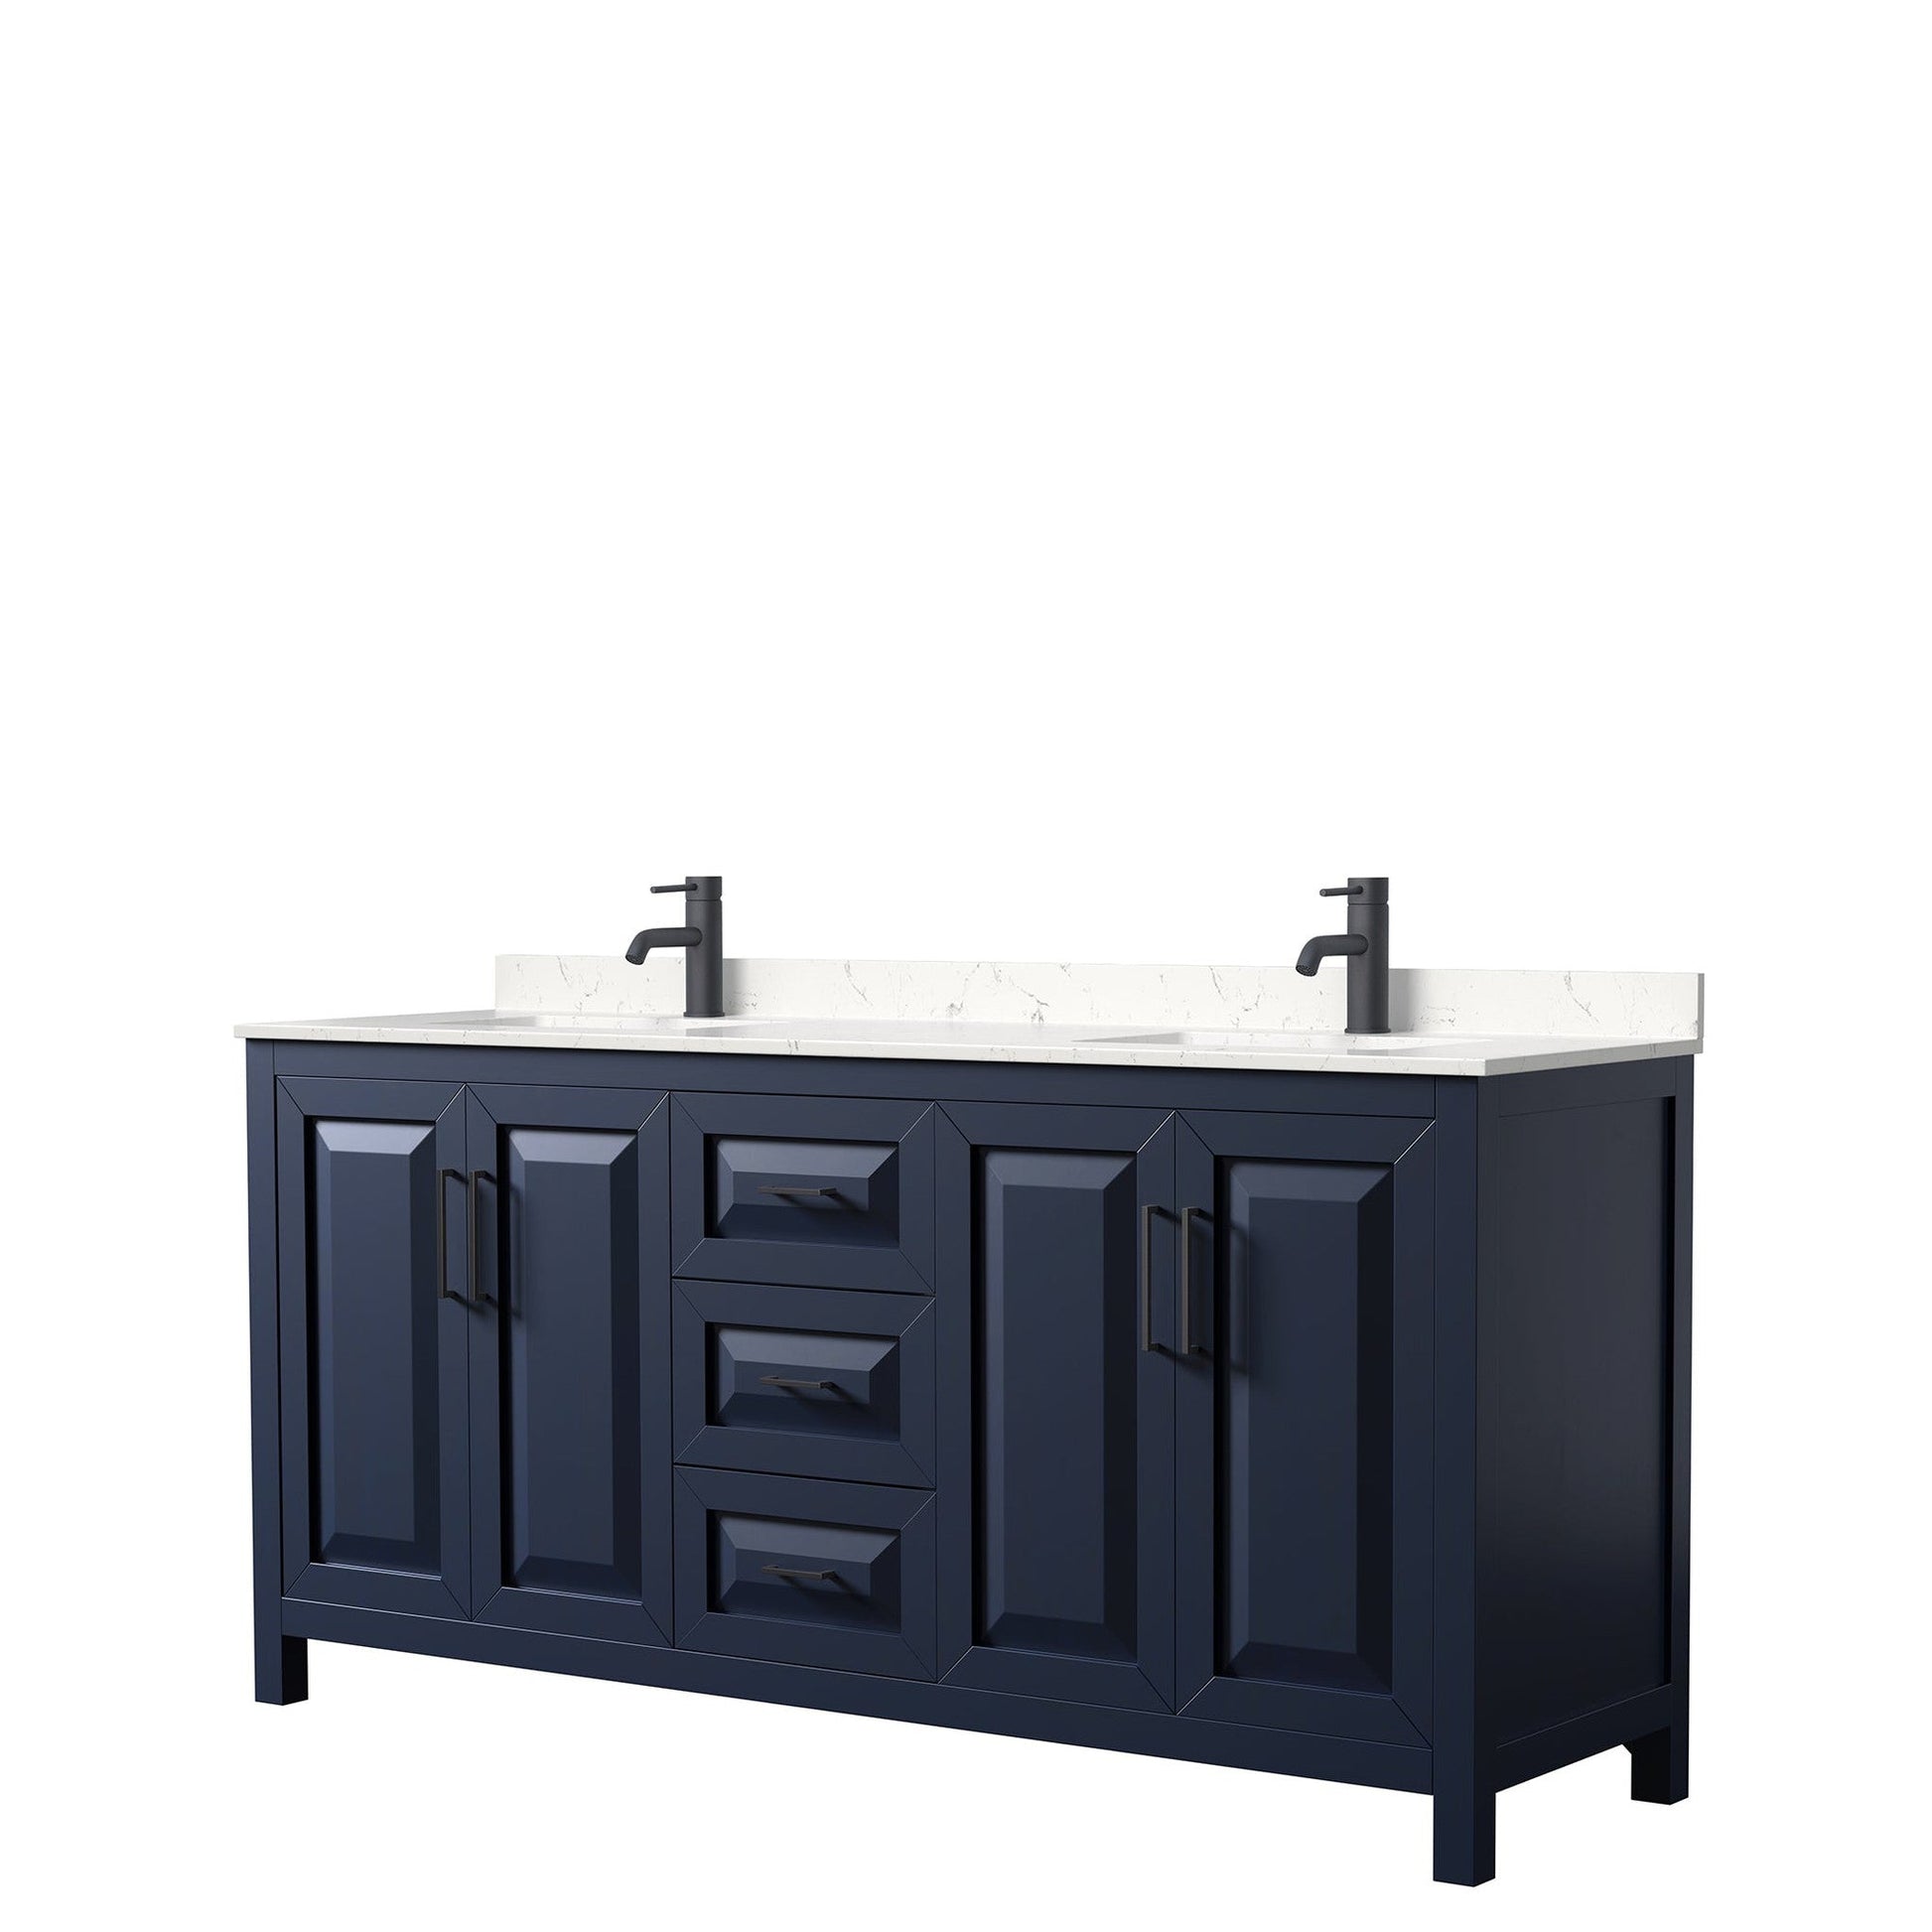 Daria 72" Double Bathroom Vanity in Dark Blue, Carrara Cultured Marble Countertop, Undermount Square Sinks, Matte Black Trim